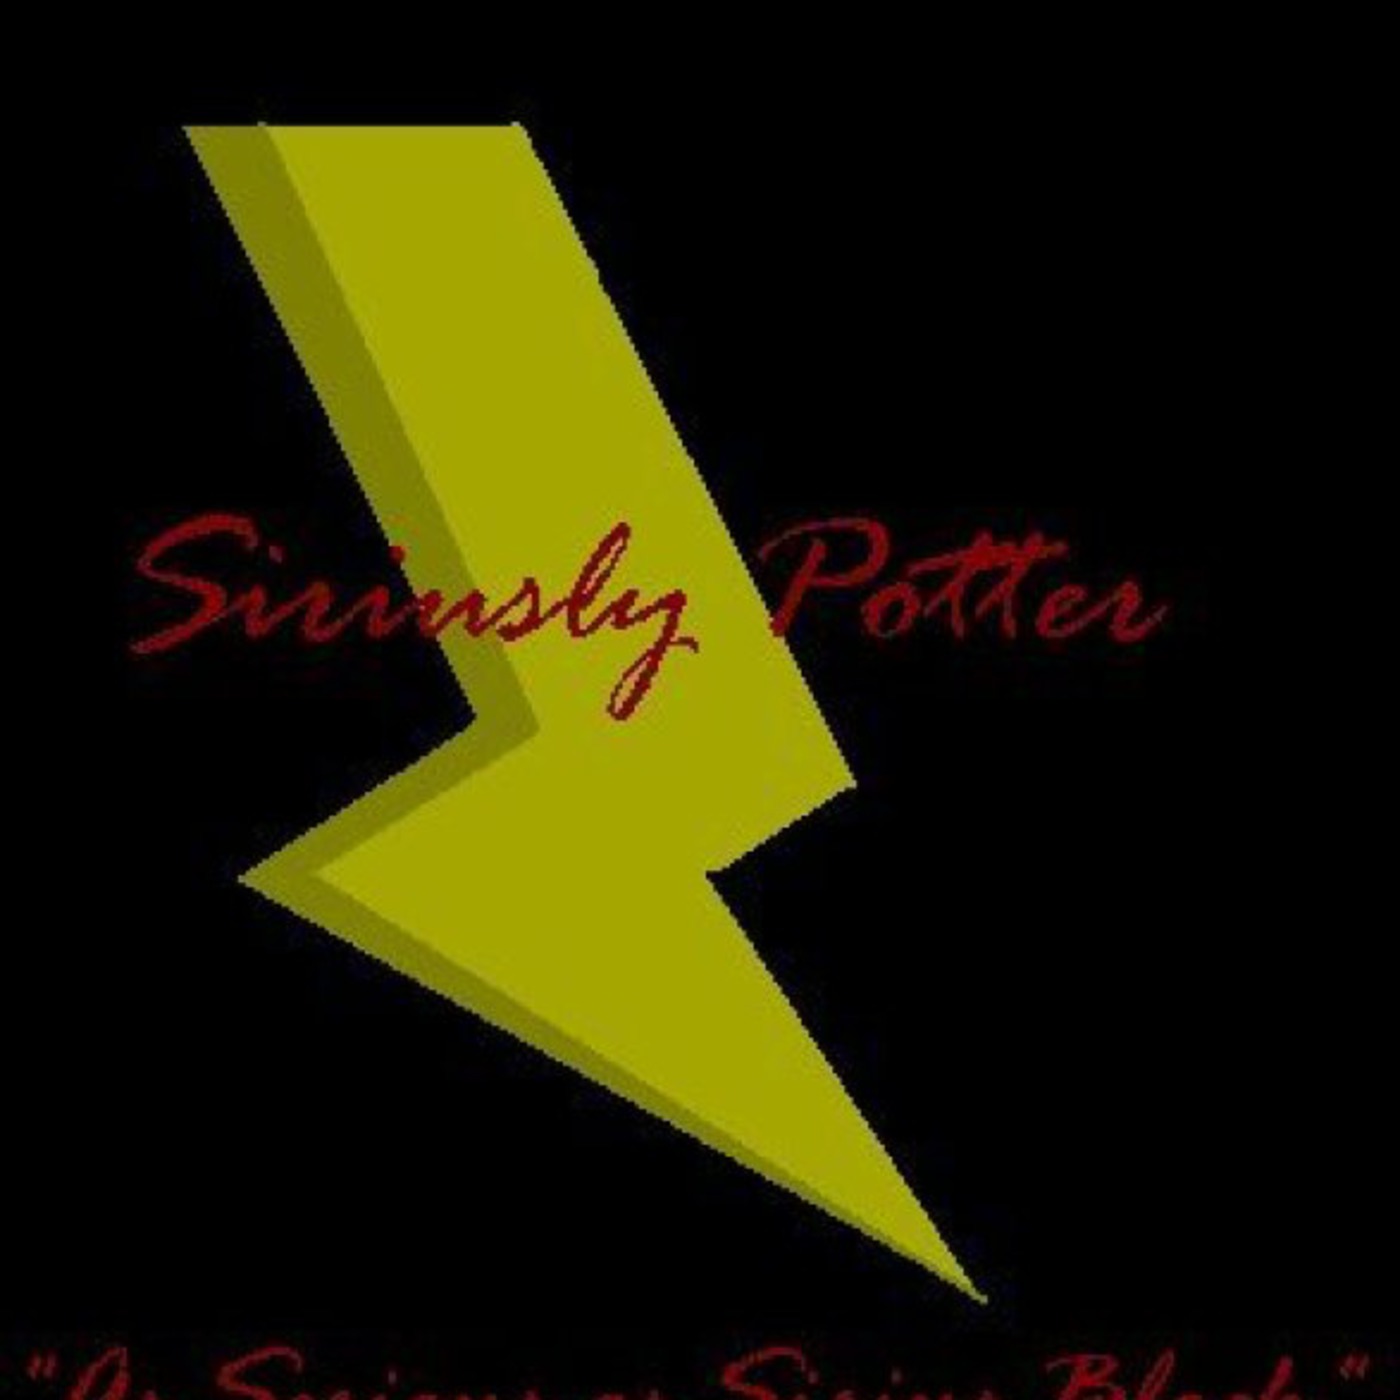 Siriusly Potter